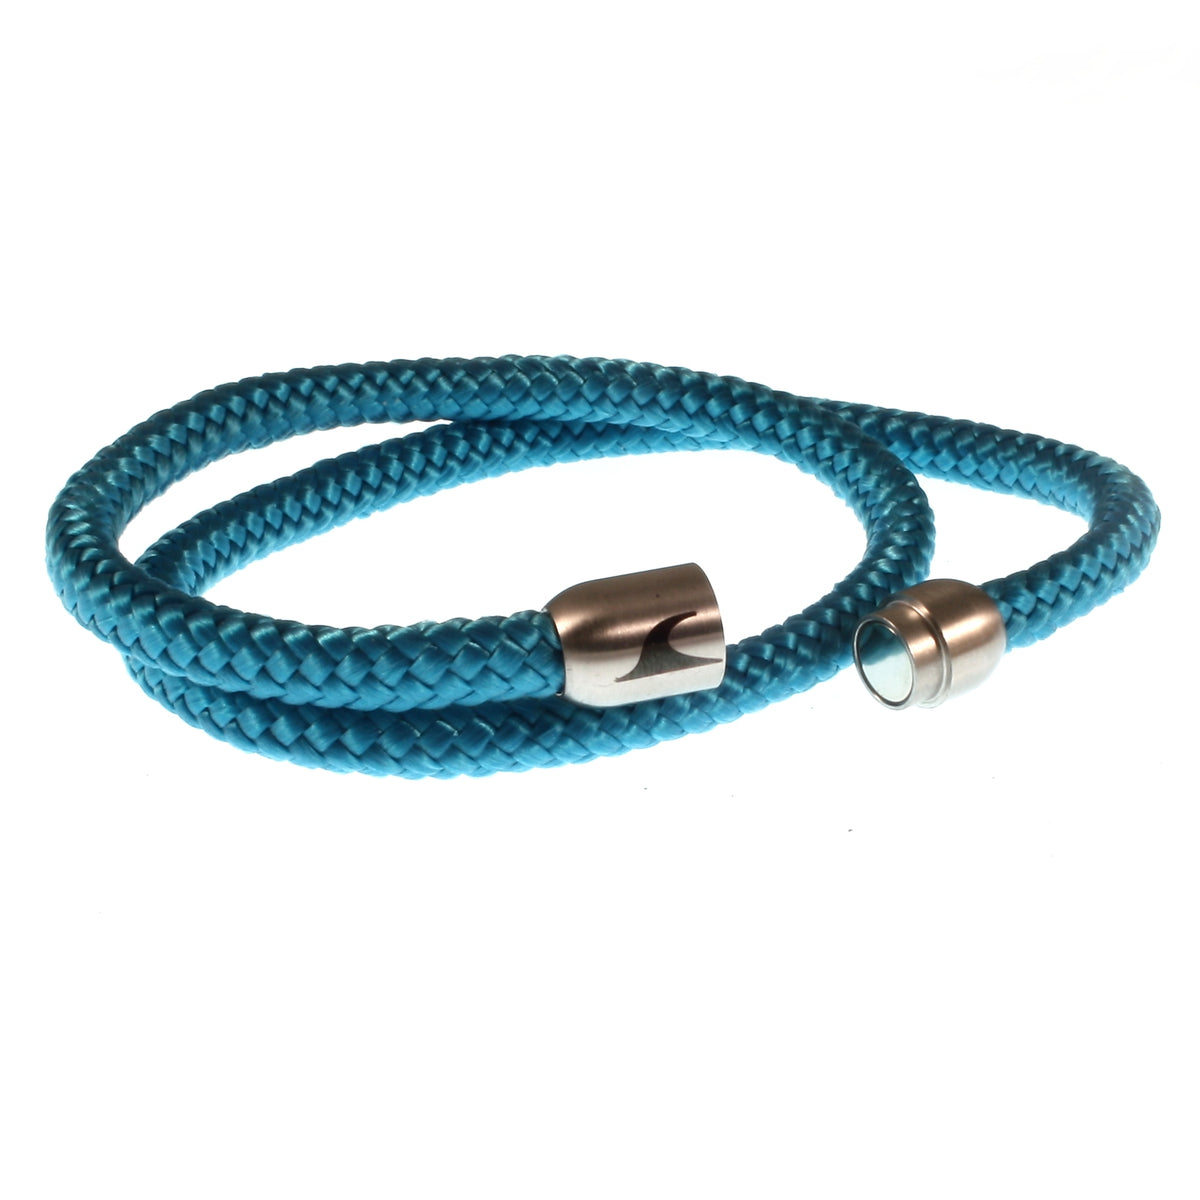 Herren-Segeltau-Armband-damen-hawaii-blau-silber-Edelstahlverschluss-offen-wavepirate-shop-st